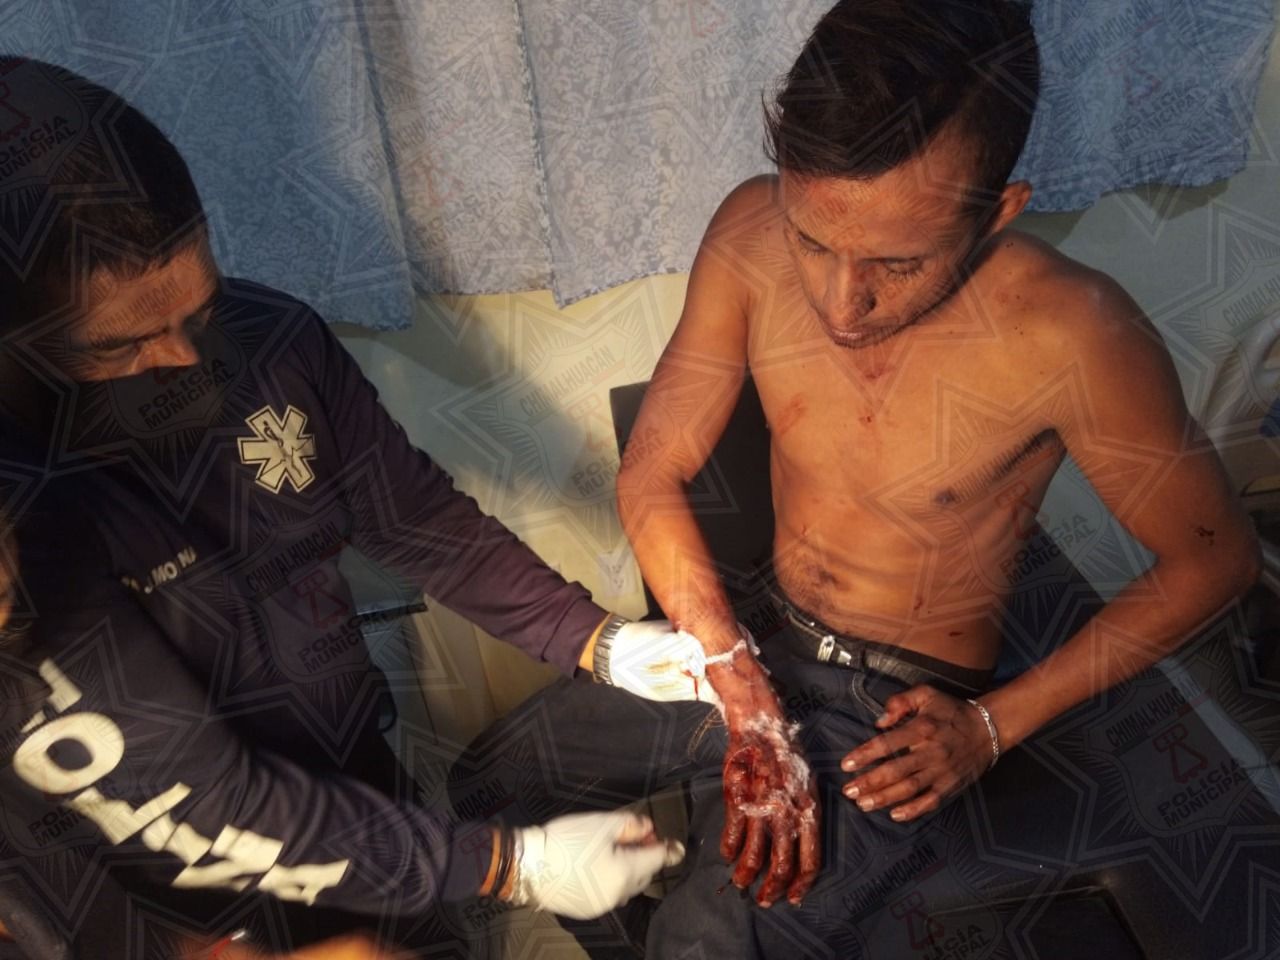 
RM Chimalhuacán auxilió a dos hombres lesionados
